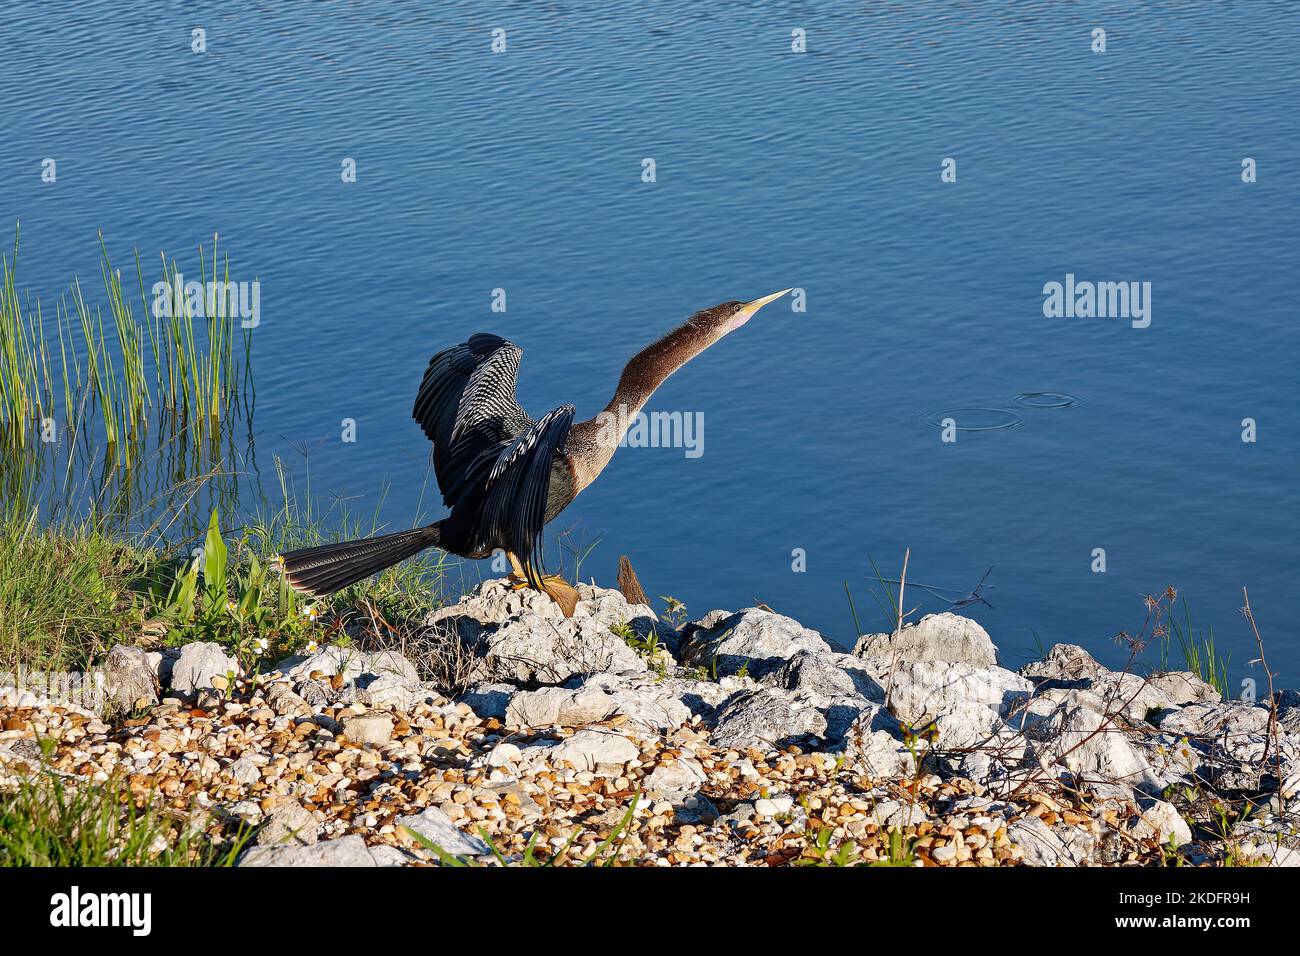 anhinga, neck reaching out over water, wings spread, just landed, bird, wildlife, animal, snakebird, waterbird, darter, Florida Stock Photo